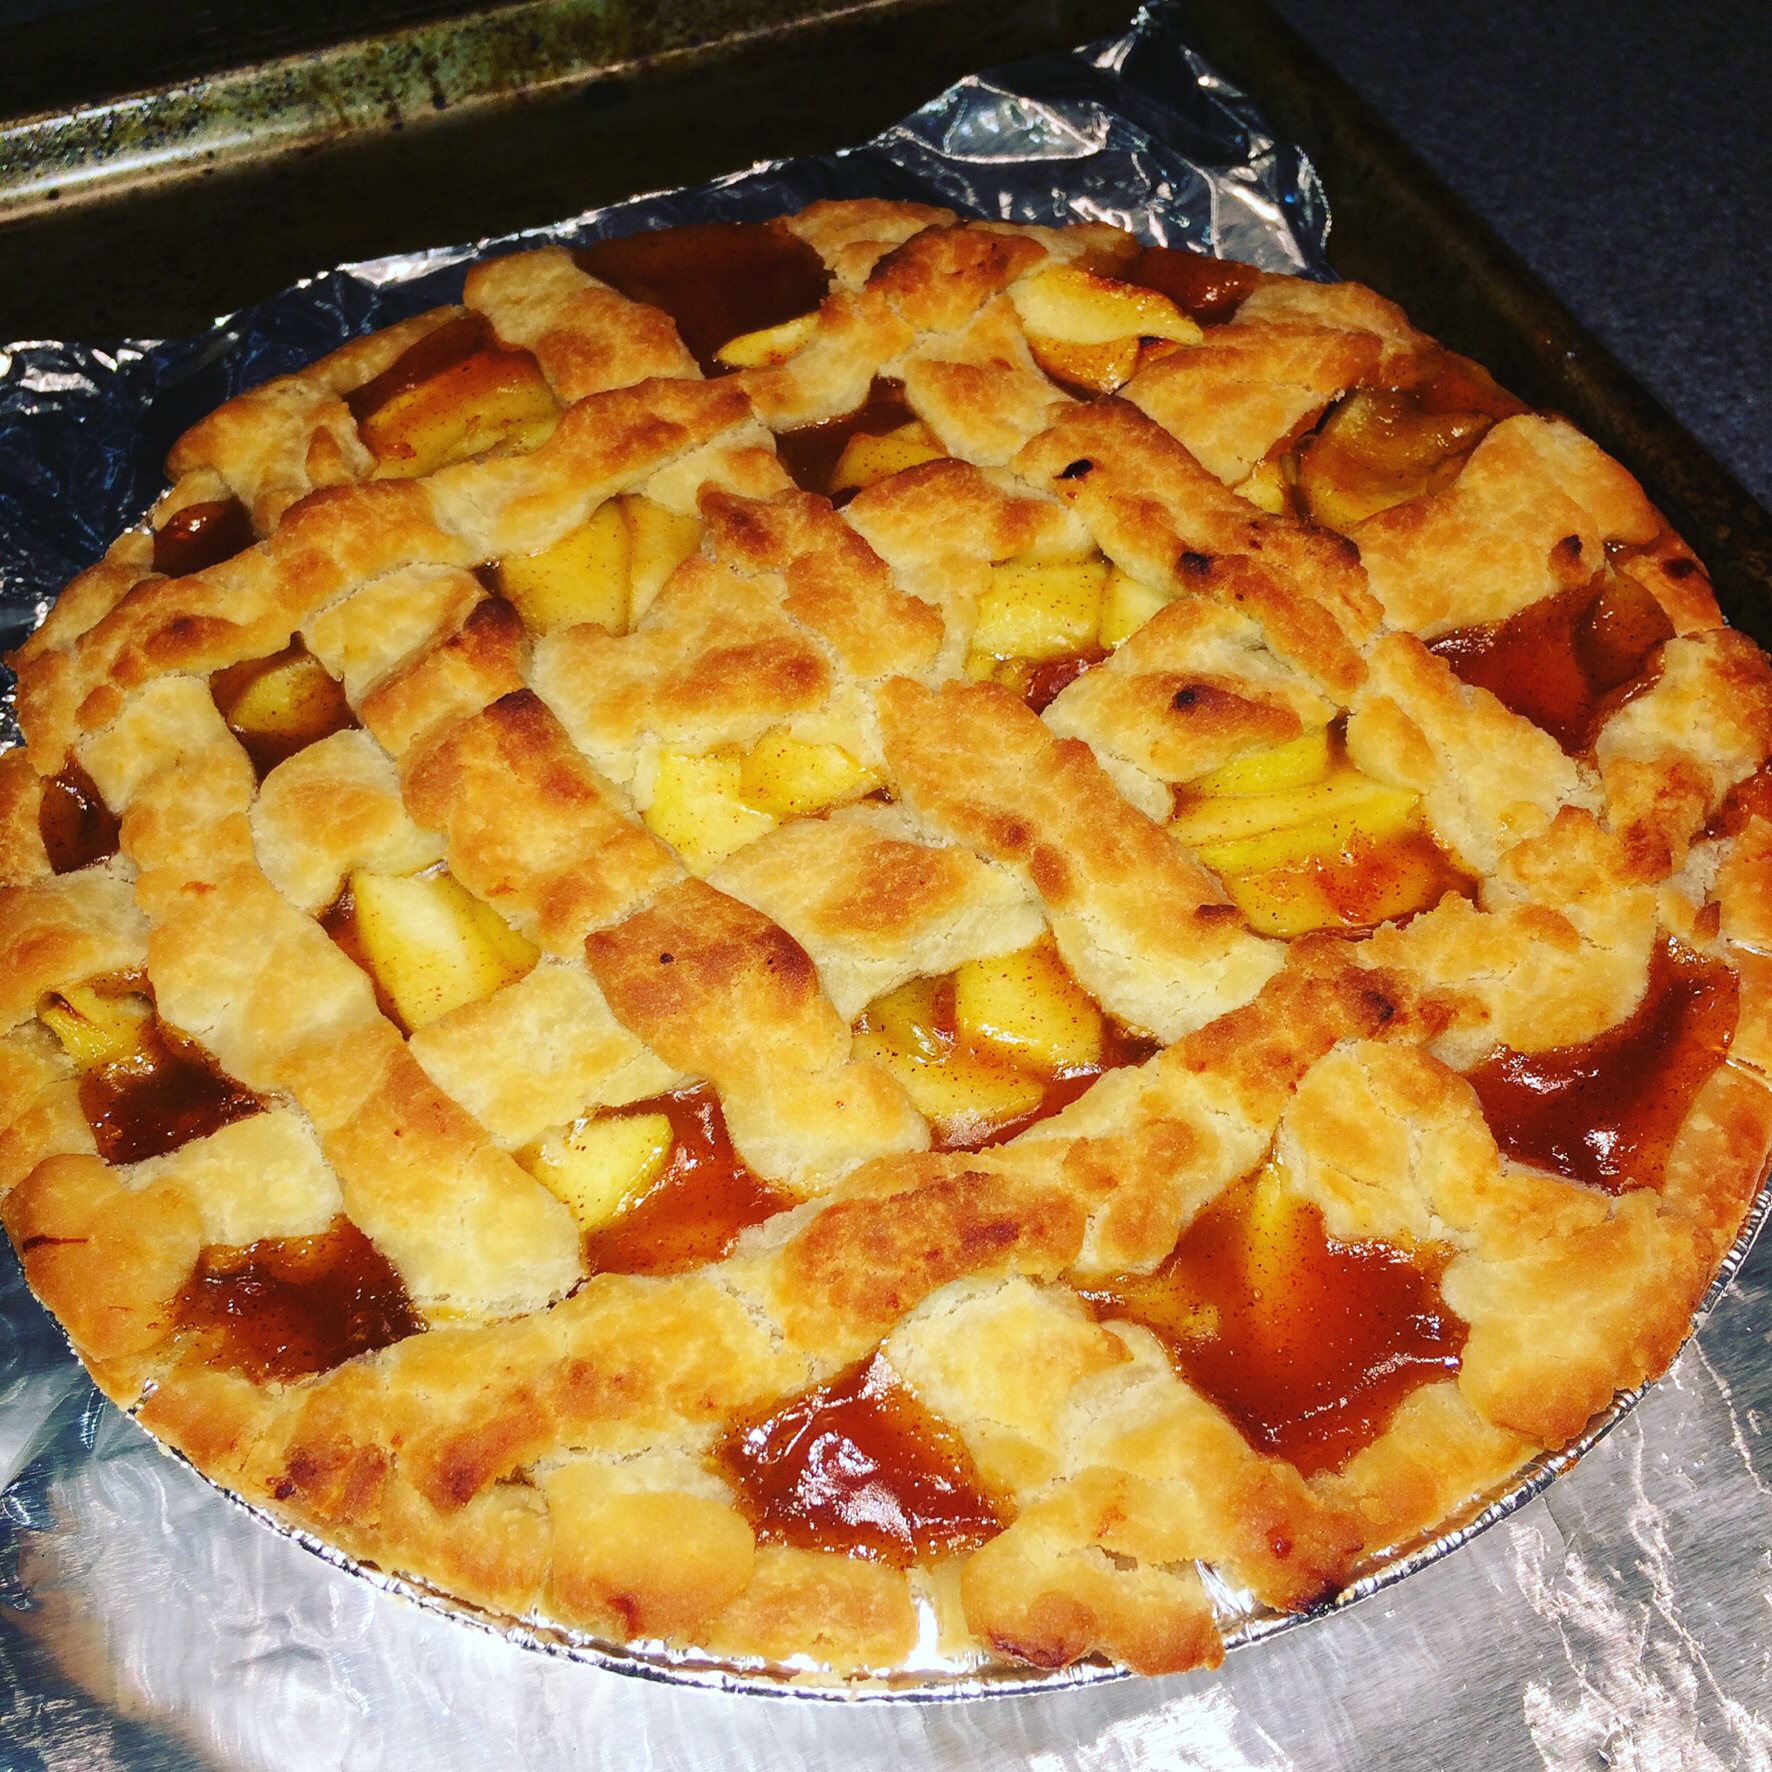 No Sugar Apple Pie Recipe Allrecipes